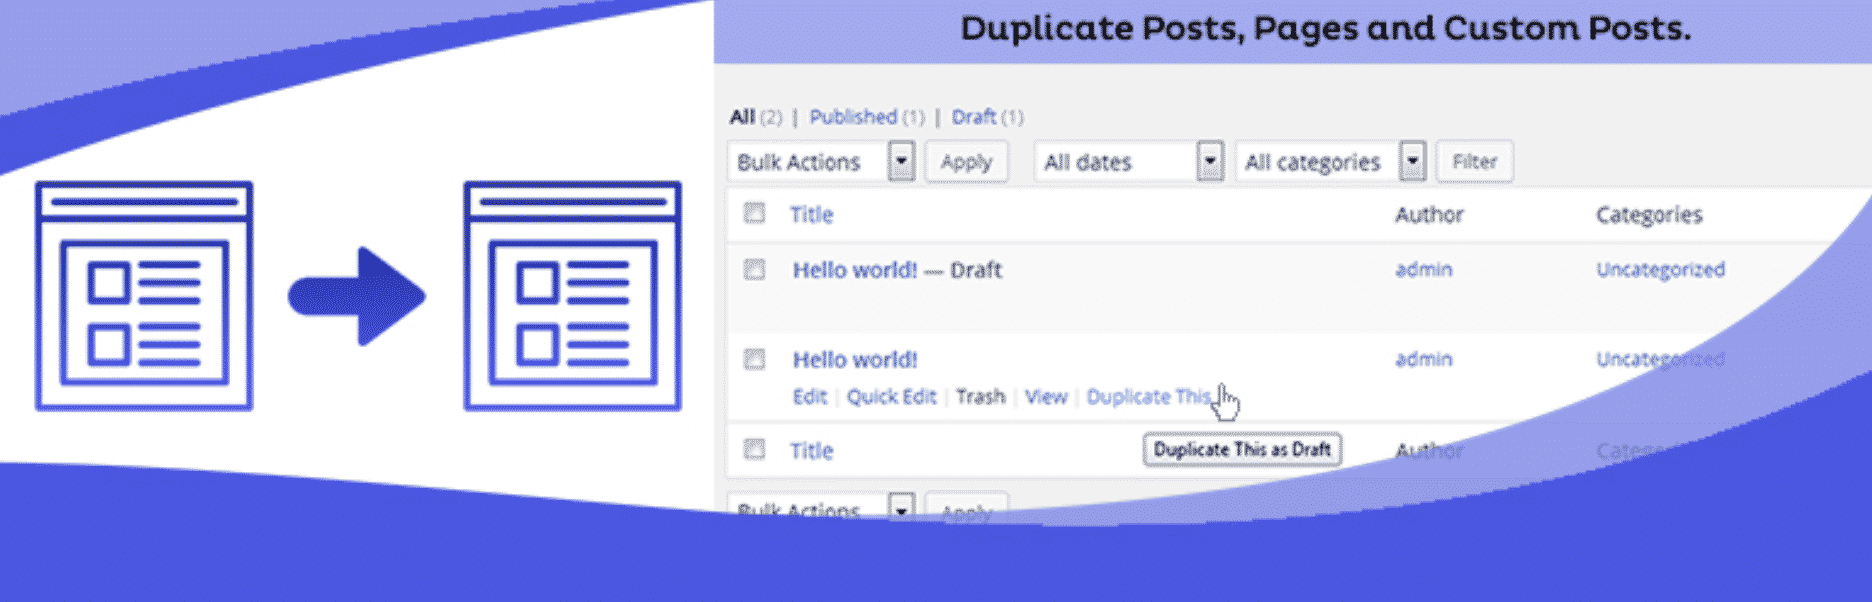 Duplicate postspages and custom posts screenshot conor bradley digital agency